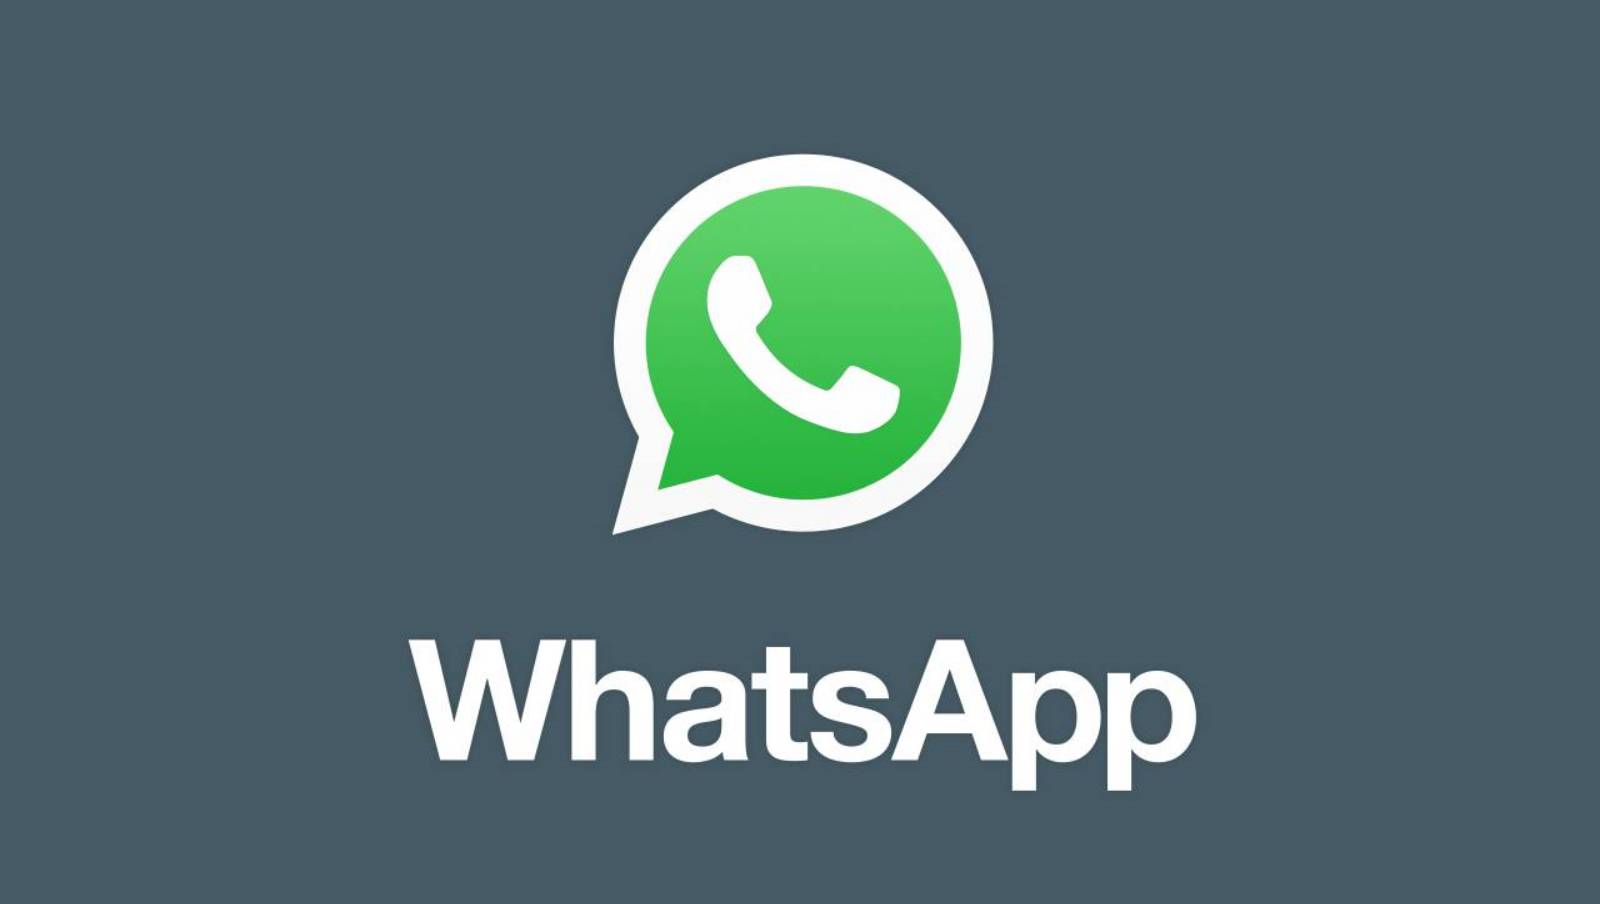 WhatsApp-liiketoiminta